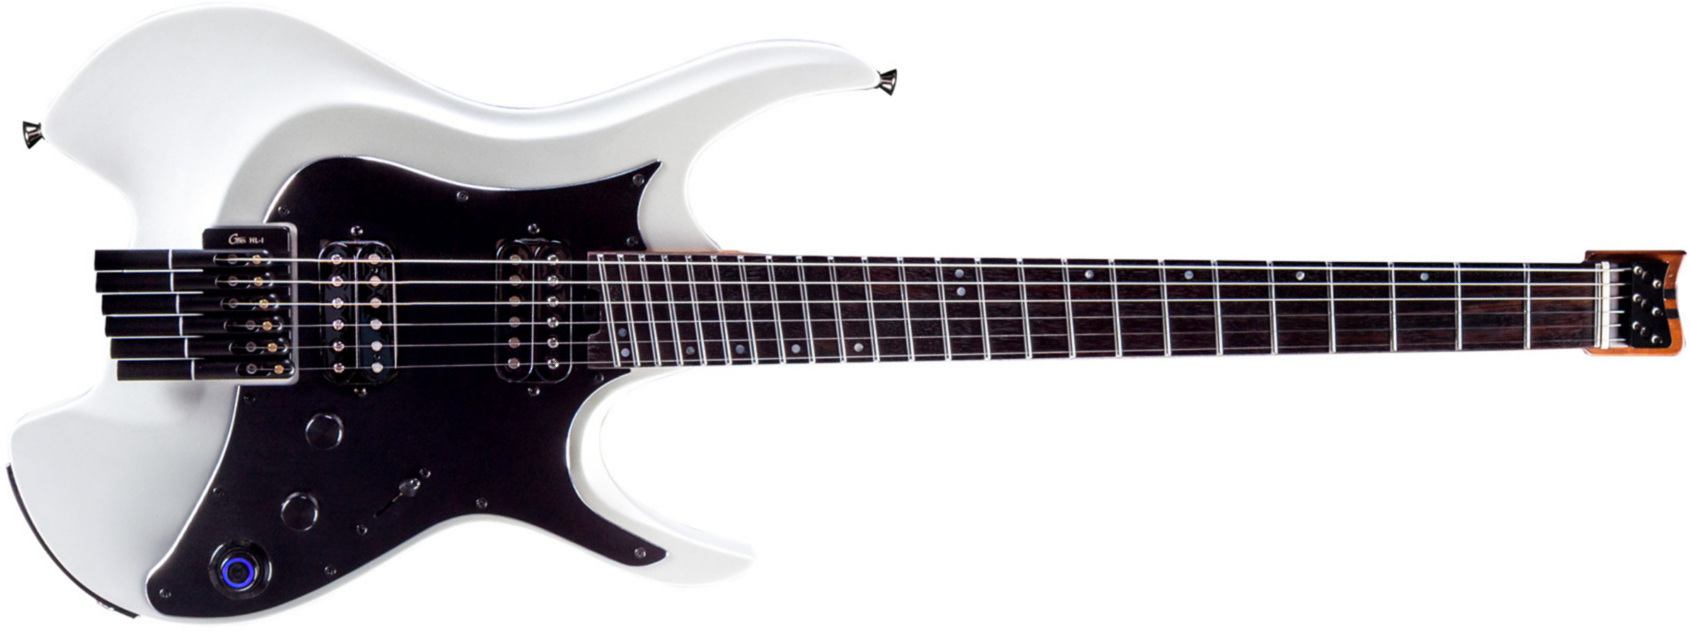 Mooer Gtrs W800 Pro Intelligent Guitar Hh Ht Rw - Pearl White - MIDI / Digital elektrische gitaar - Main picture